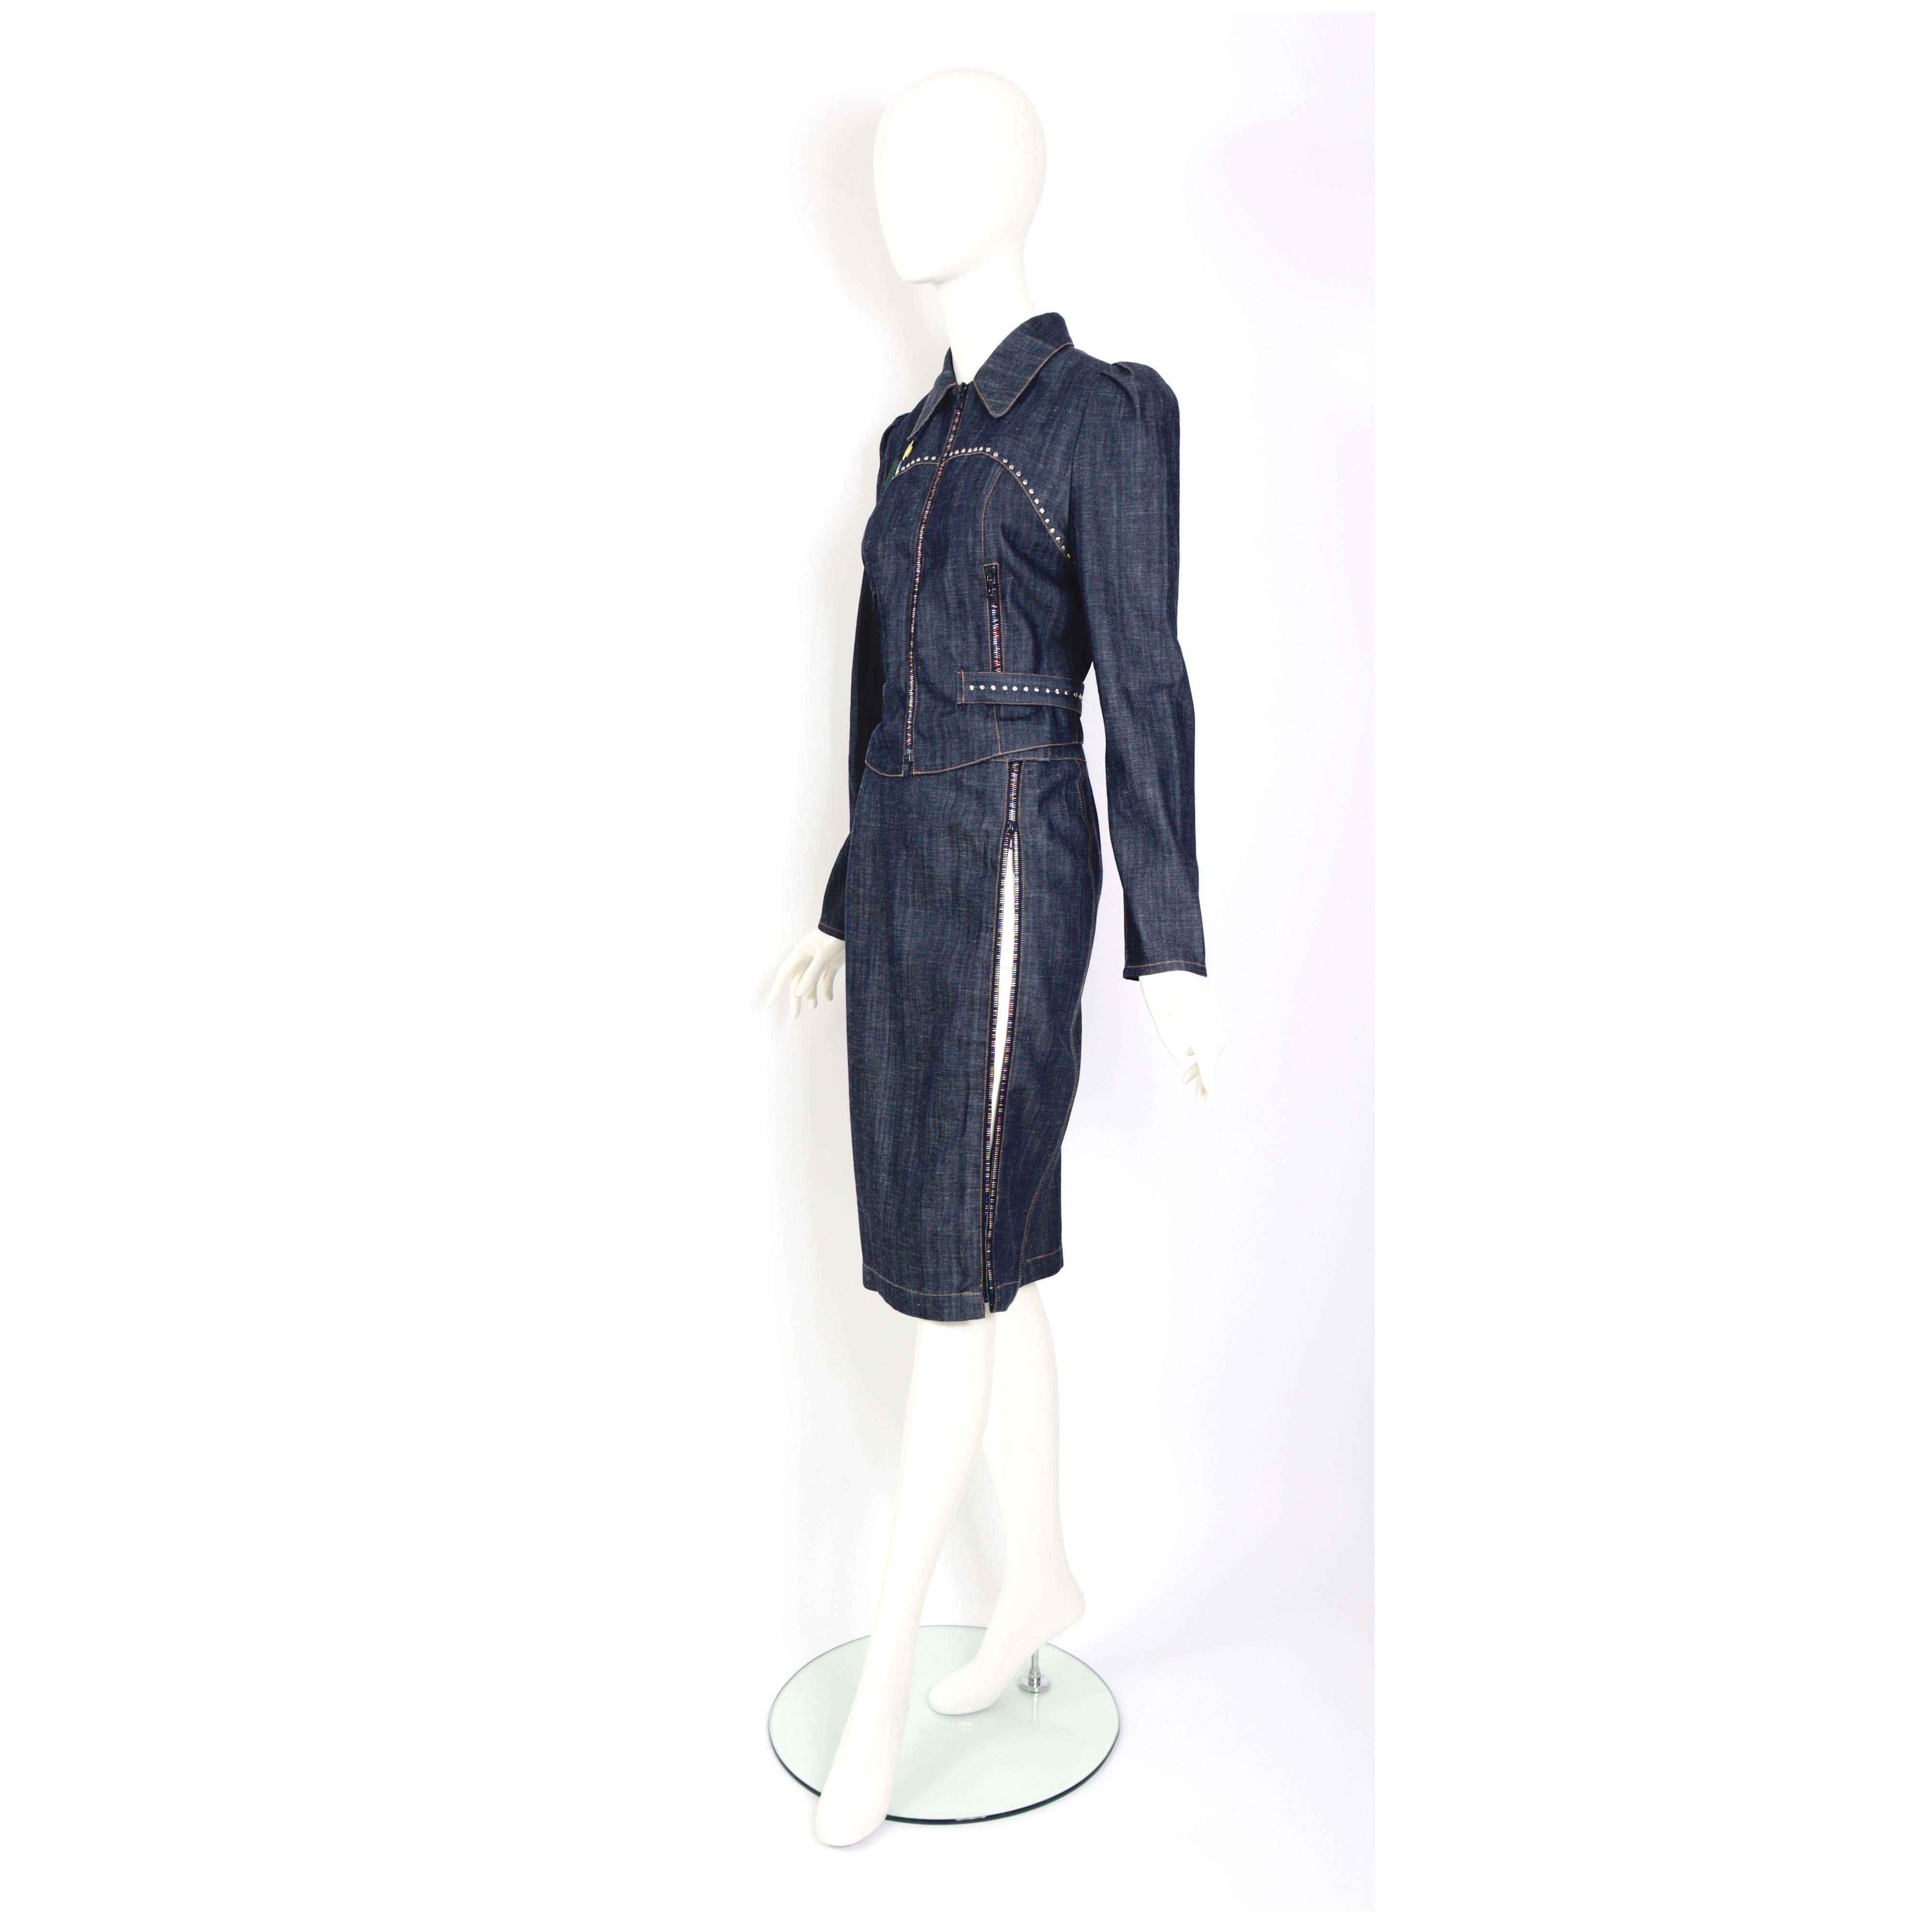 Chloé by Stella McCartney vintage 2001 denim jacket and skirt set For Sale 1